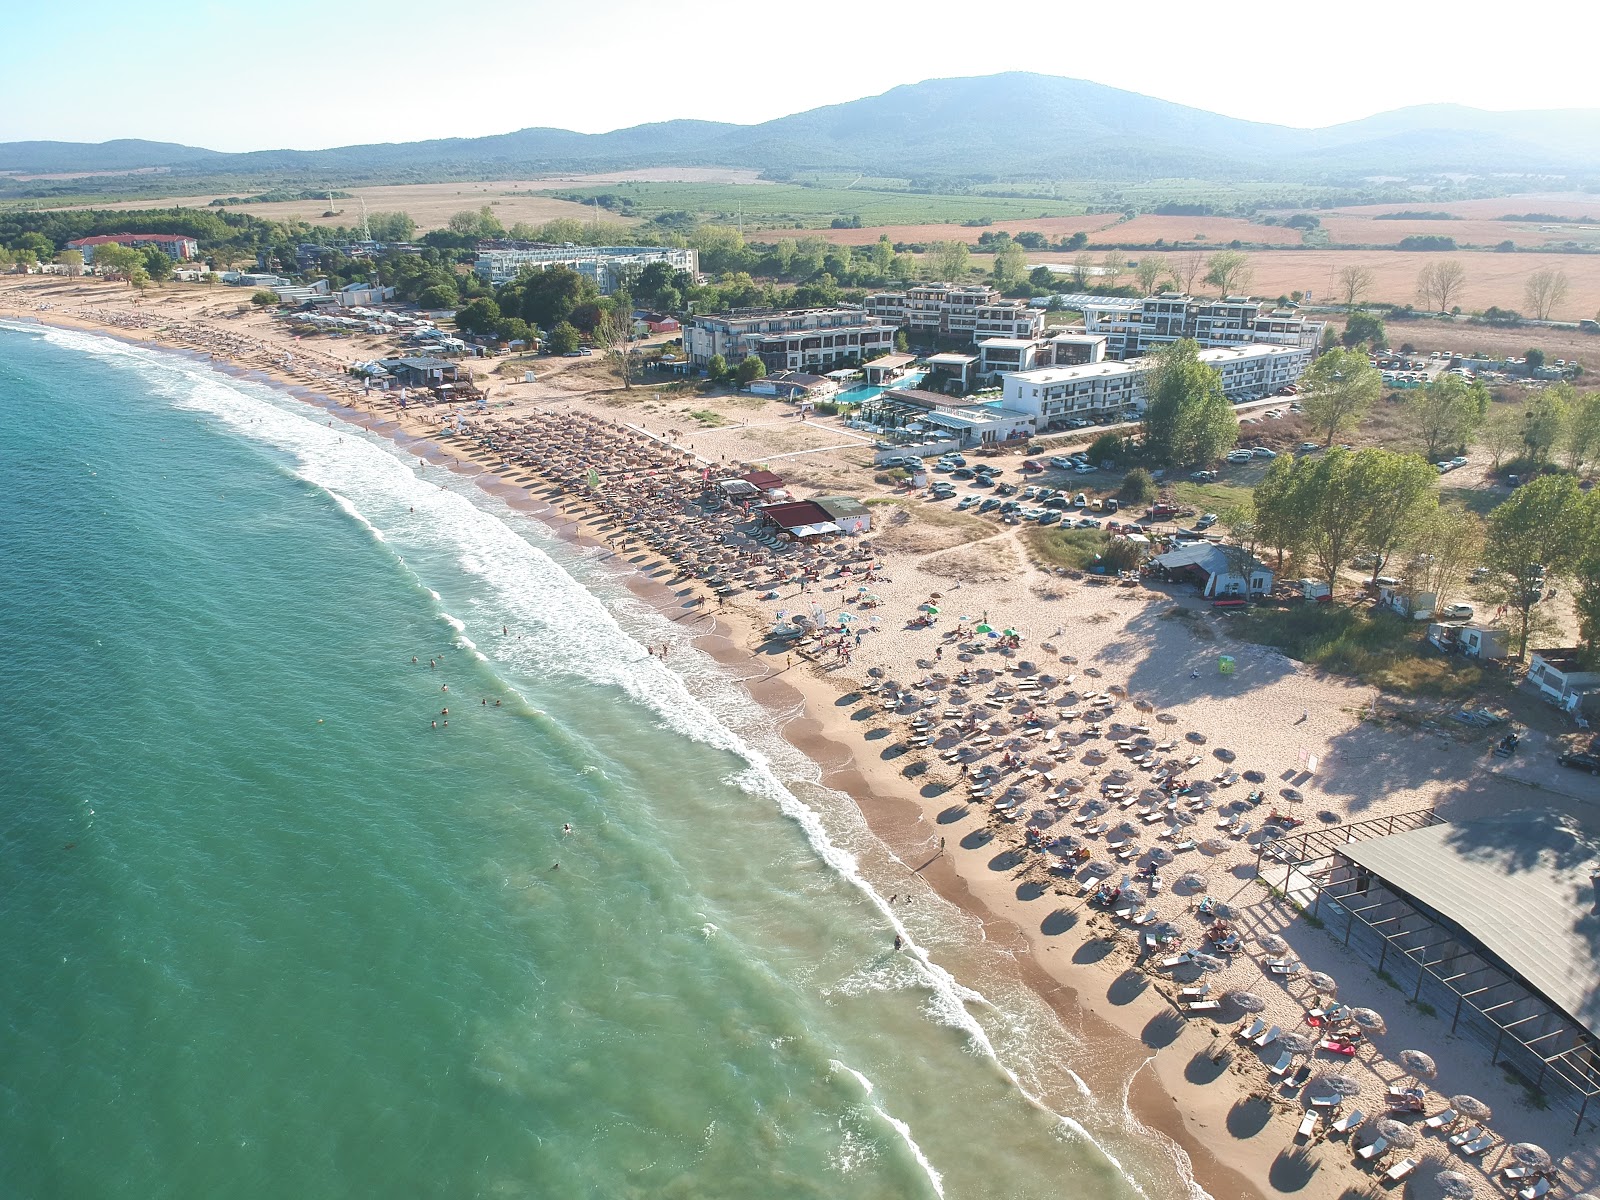 Foto de Zlatna ribka beach II - lugar popular entre os apreciadores de relaxamento